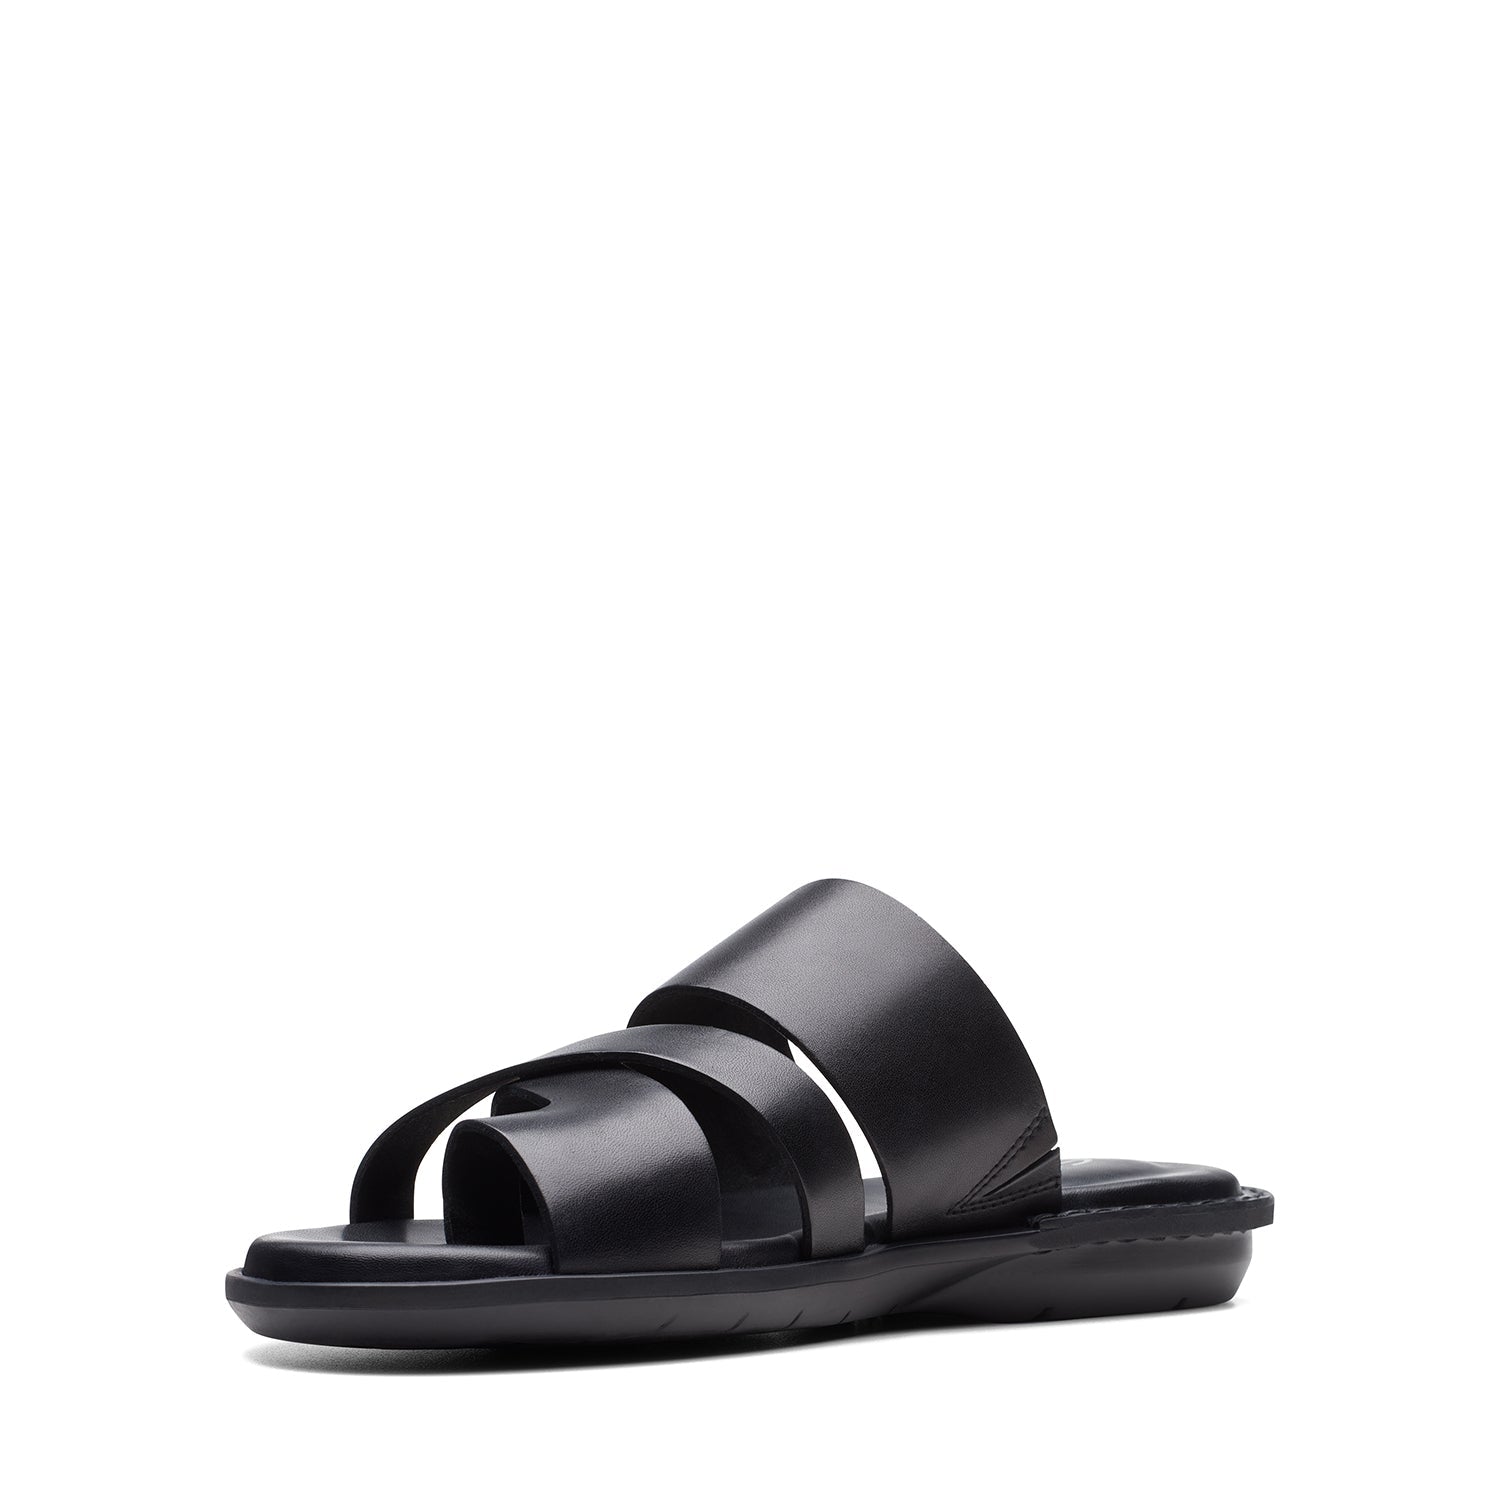 Clarks Penryn Loop Sandals - Black Leather - 261745877 - G Width (Standard Fit)